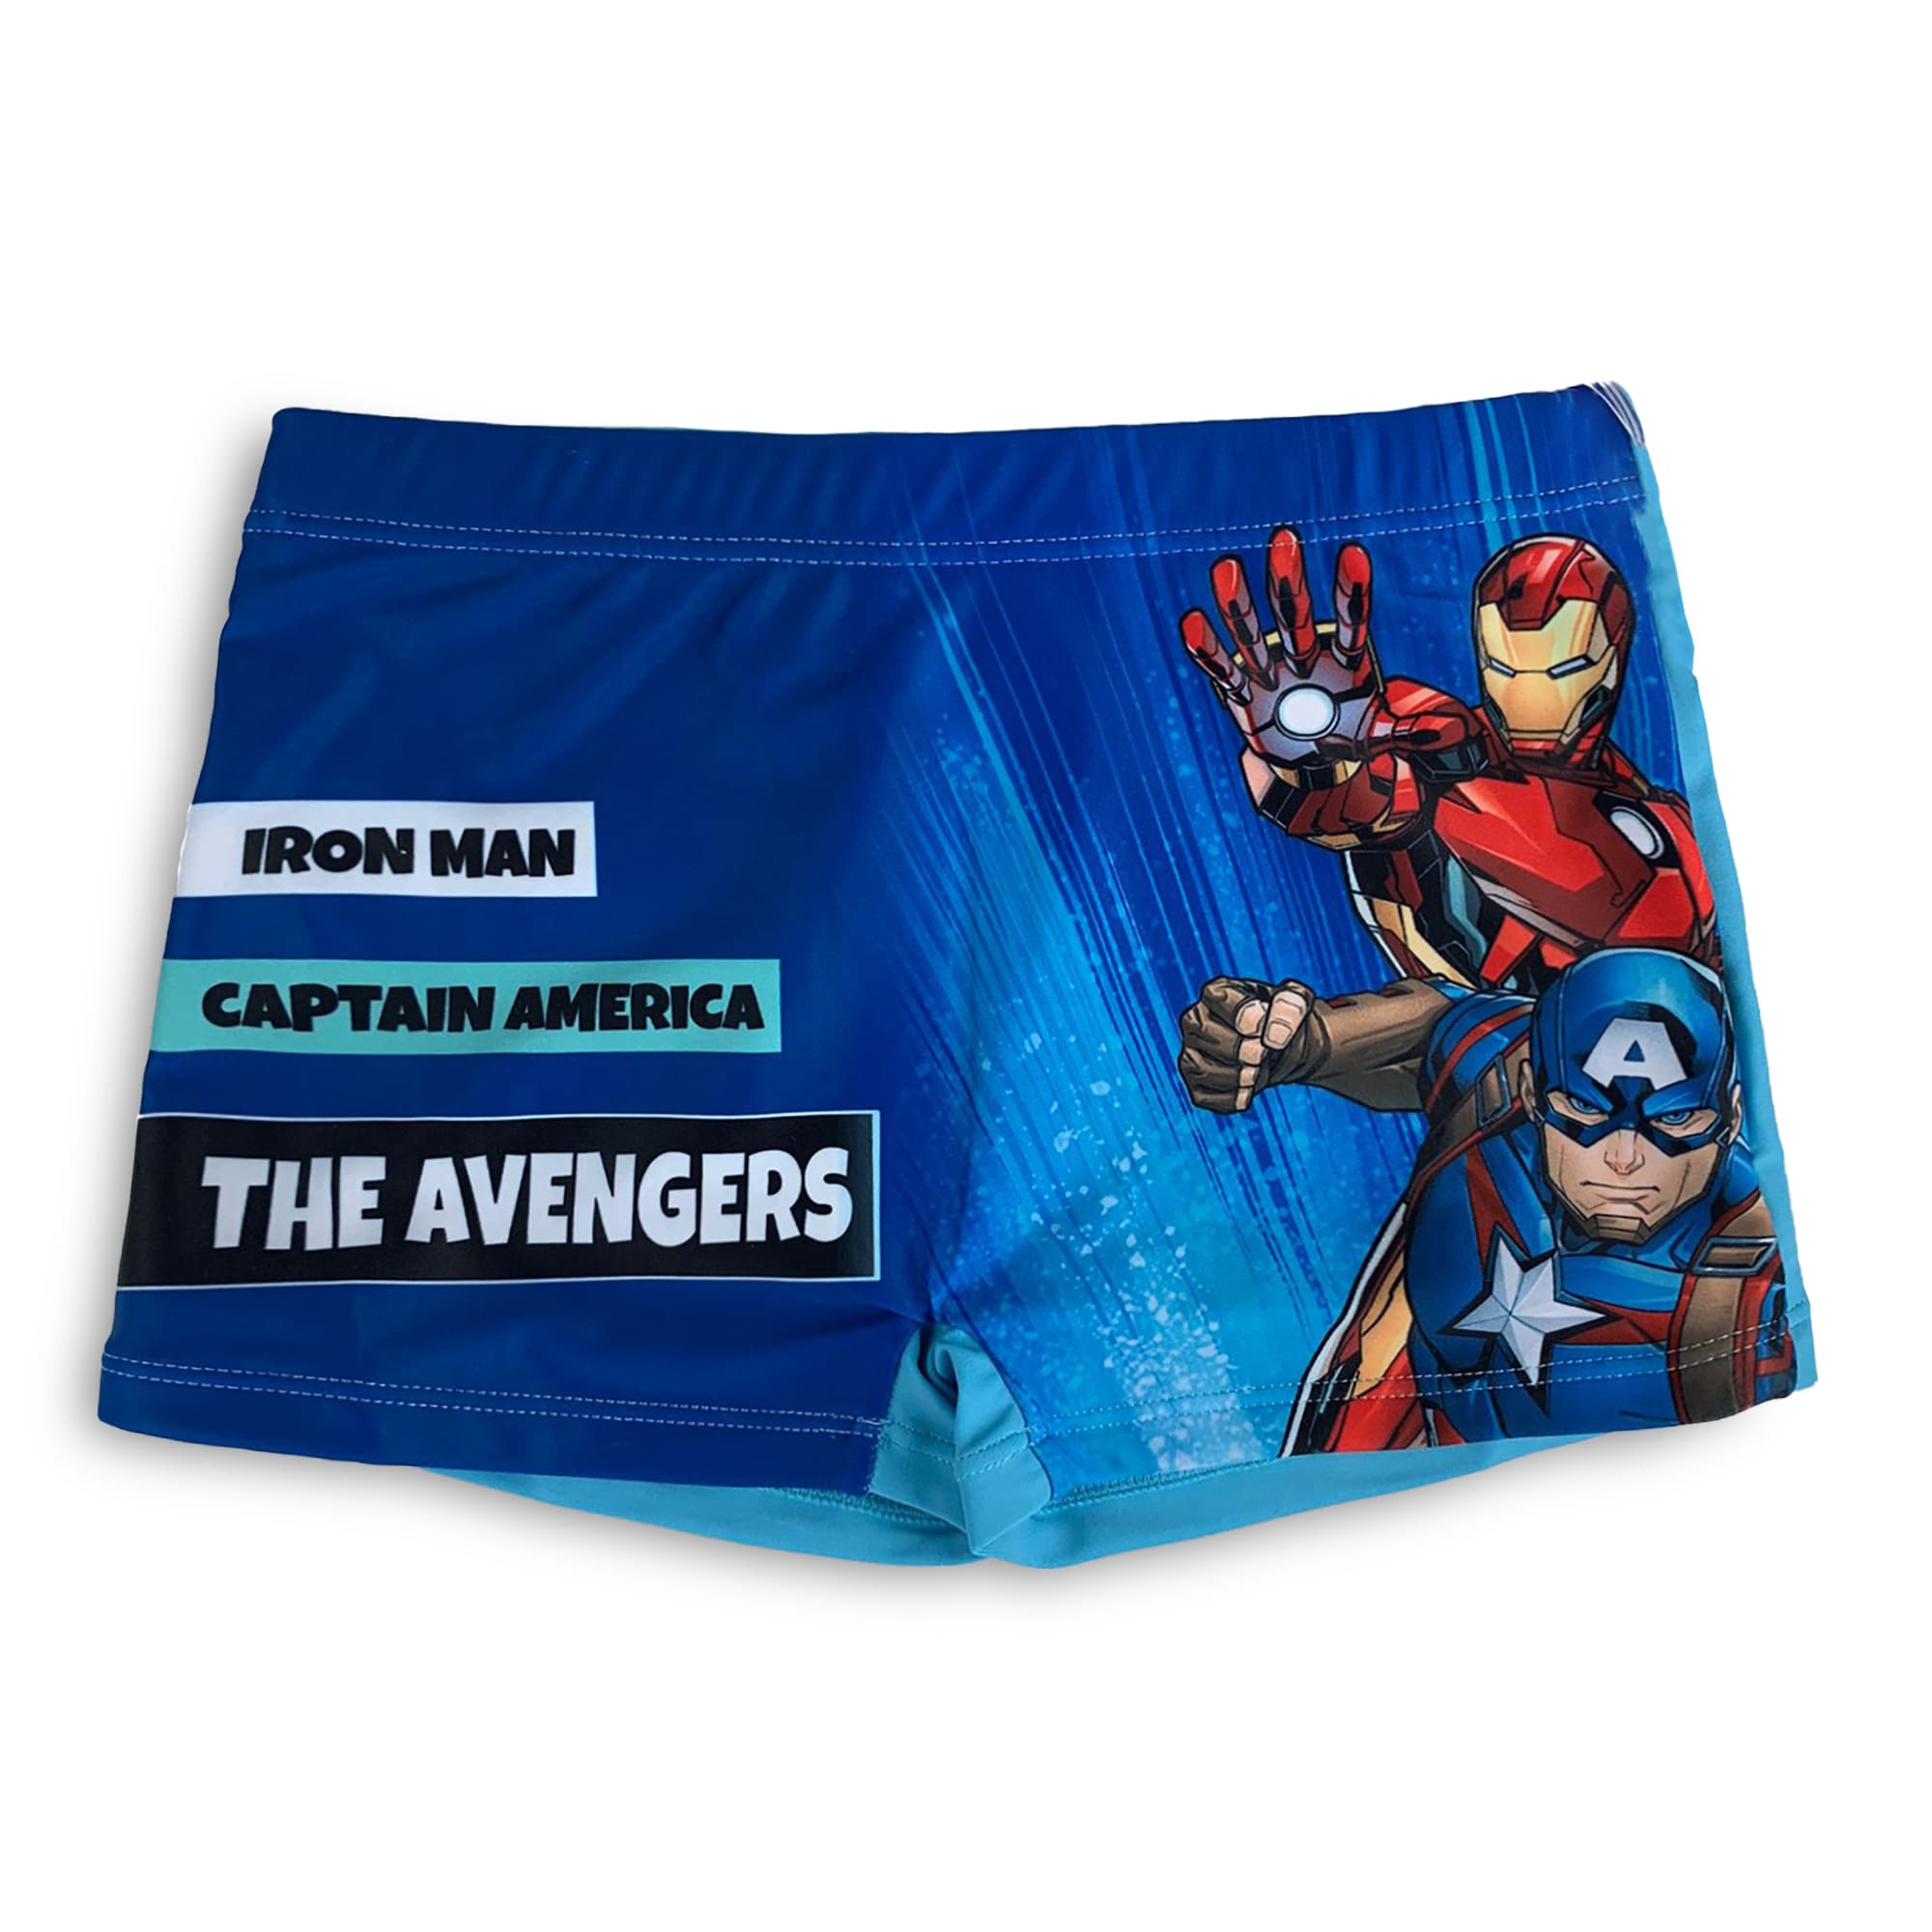 Costume mare Marvel Avengers ufficiale pantaloncino boxer bimbo piscina 4202